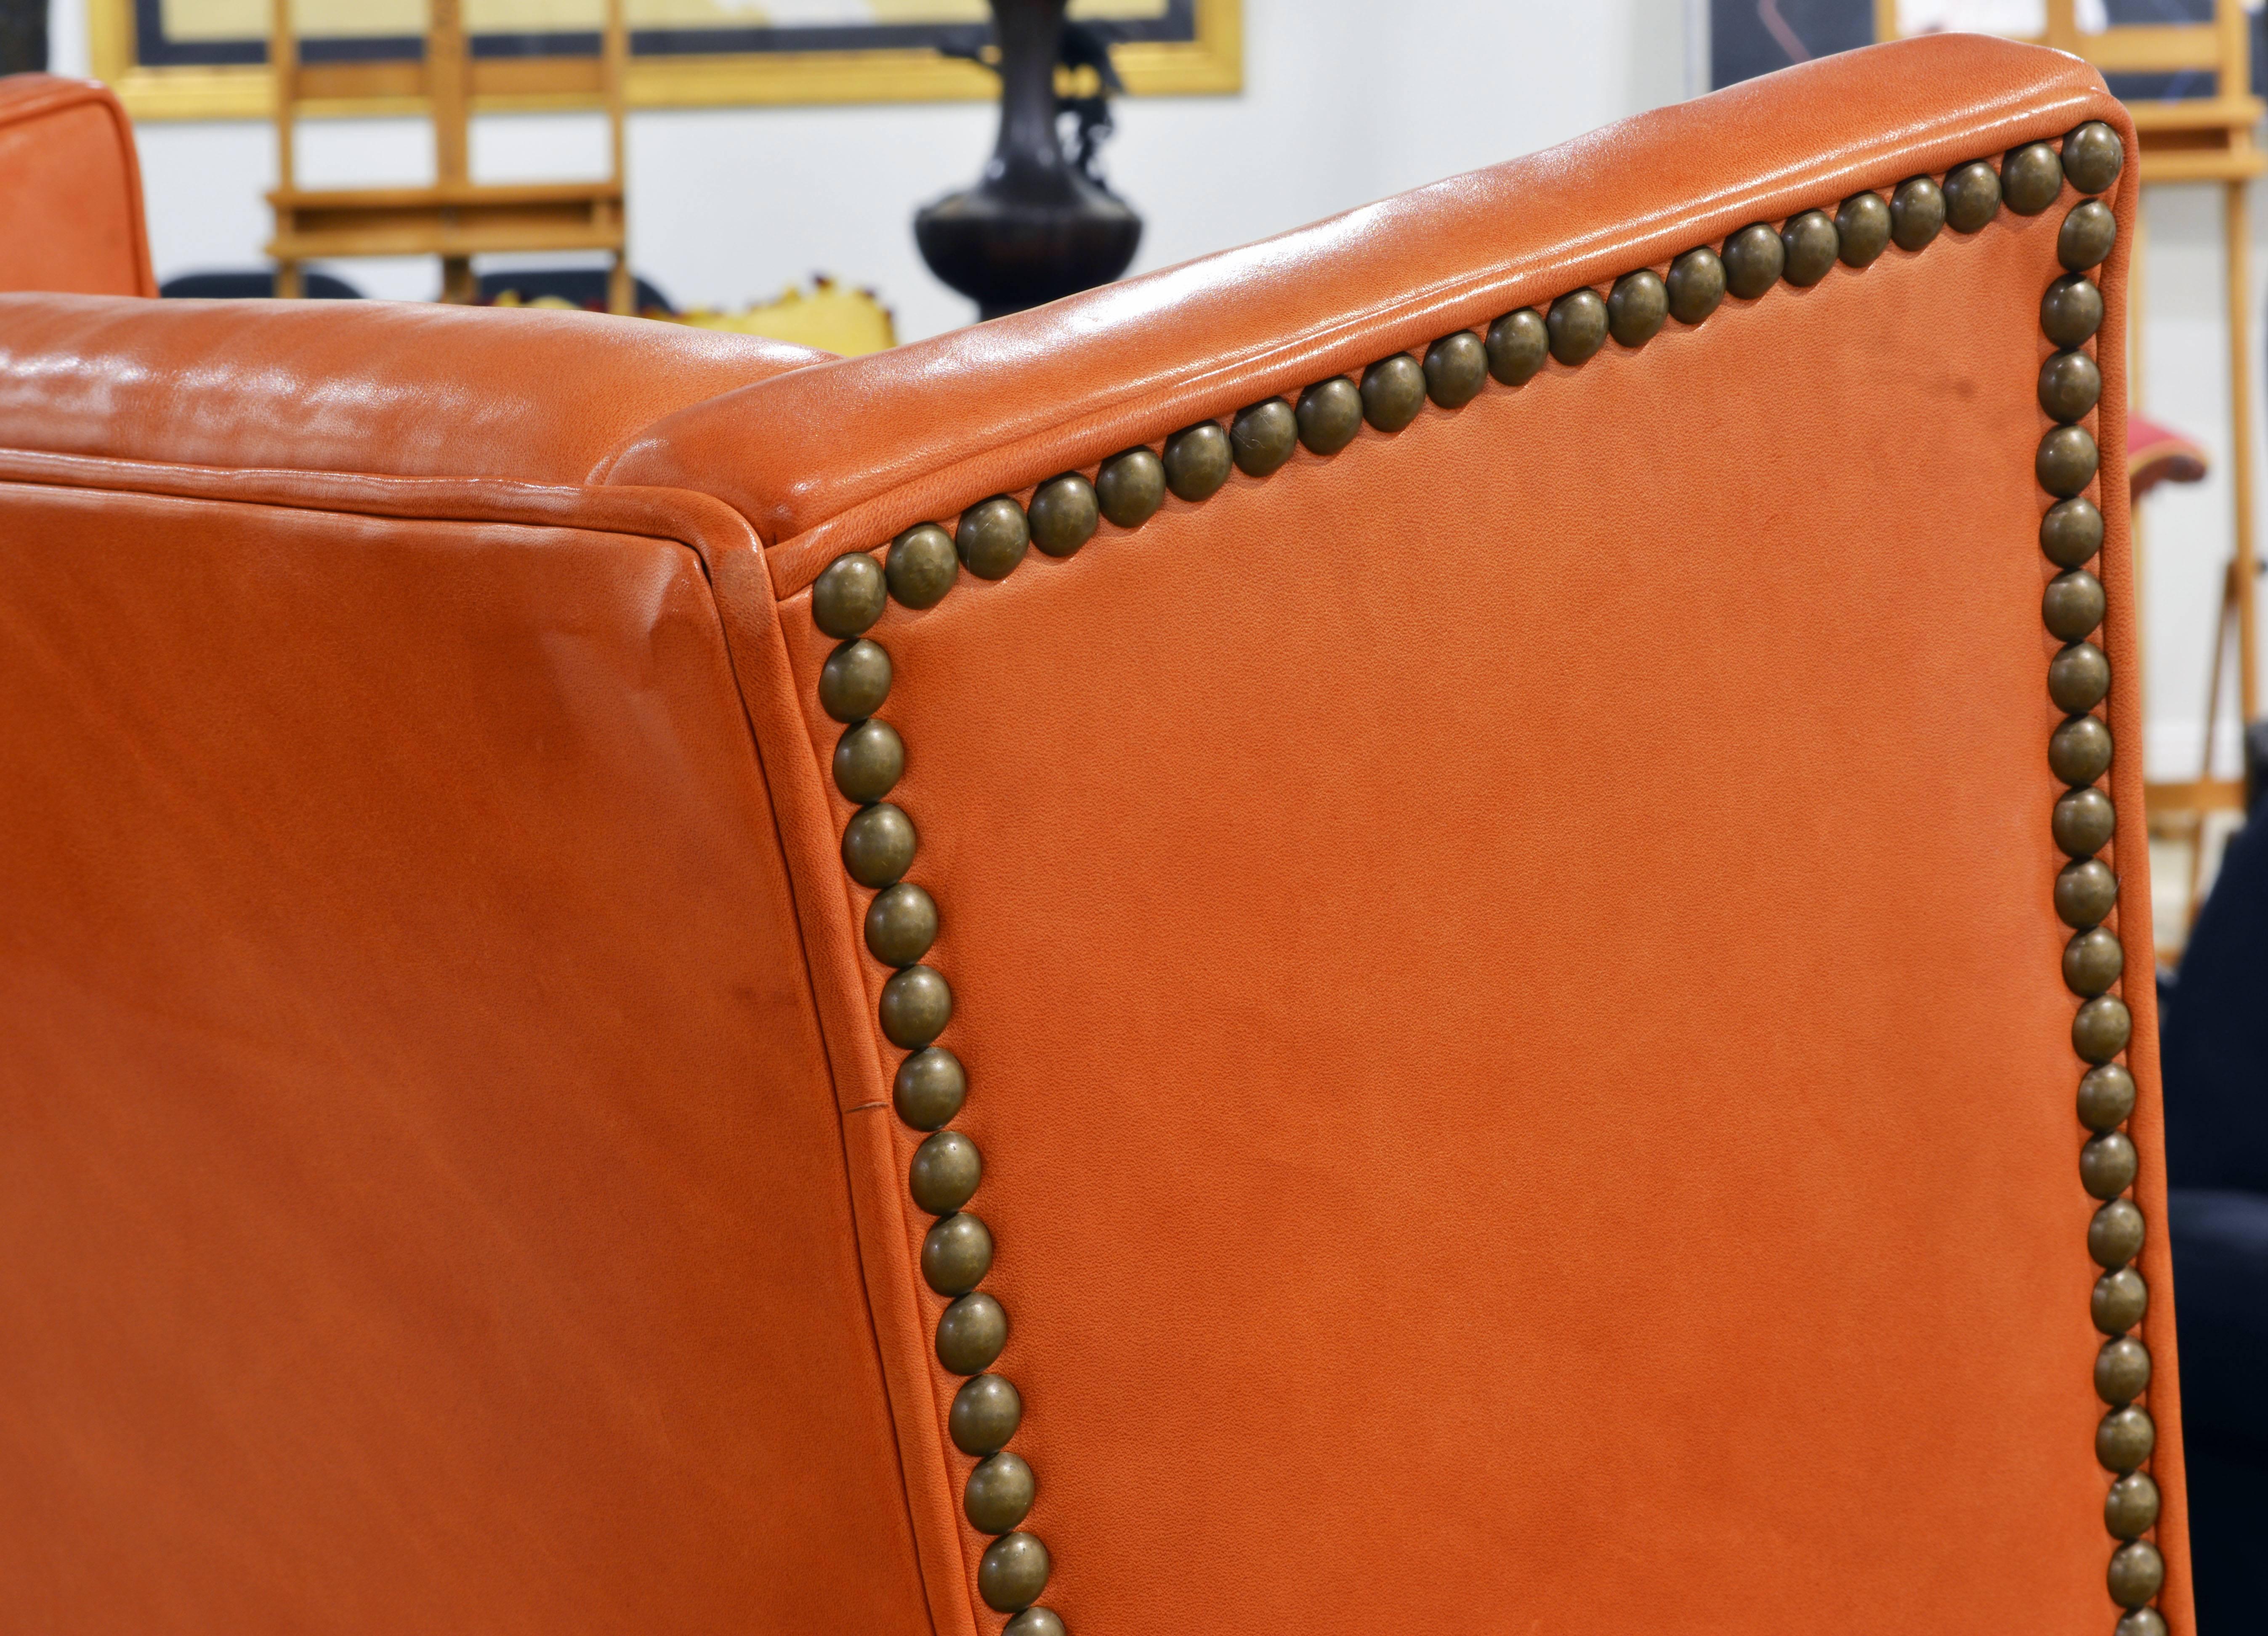 American Elegant Modern Design Leather Wing Back Chair in Hermes Orange Color